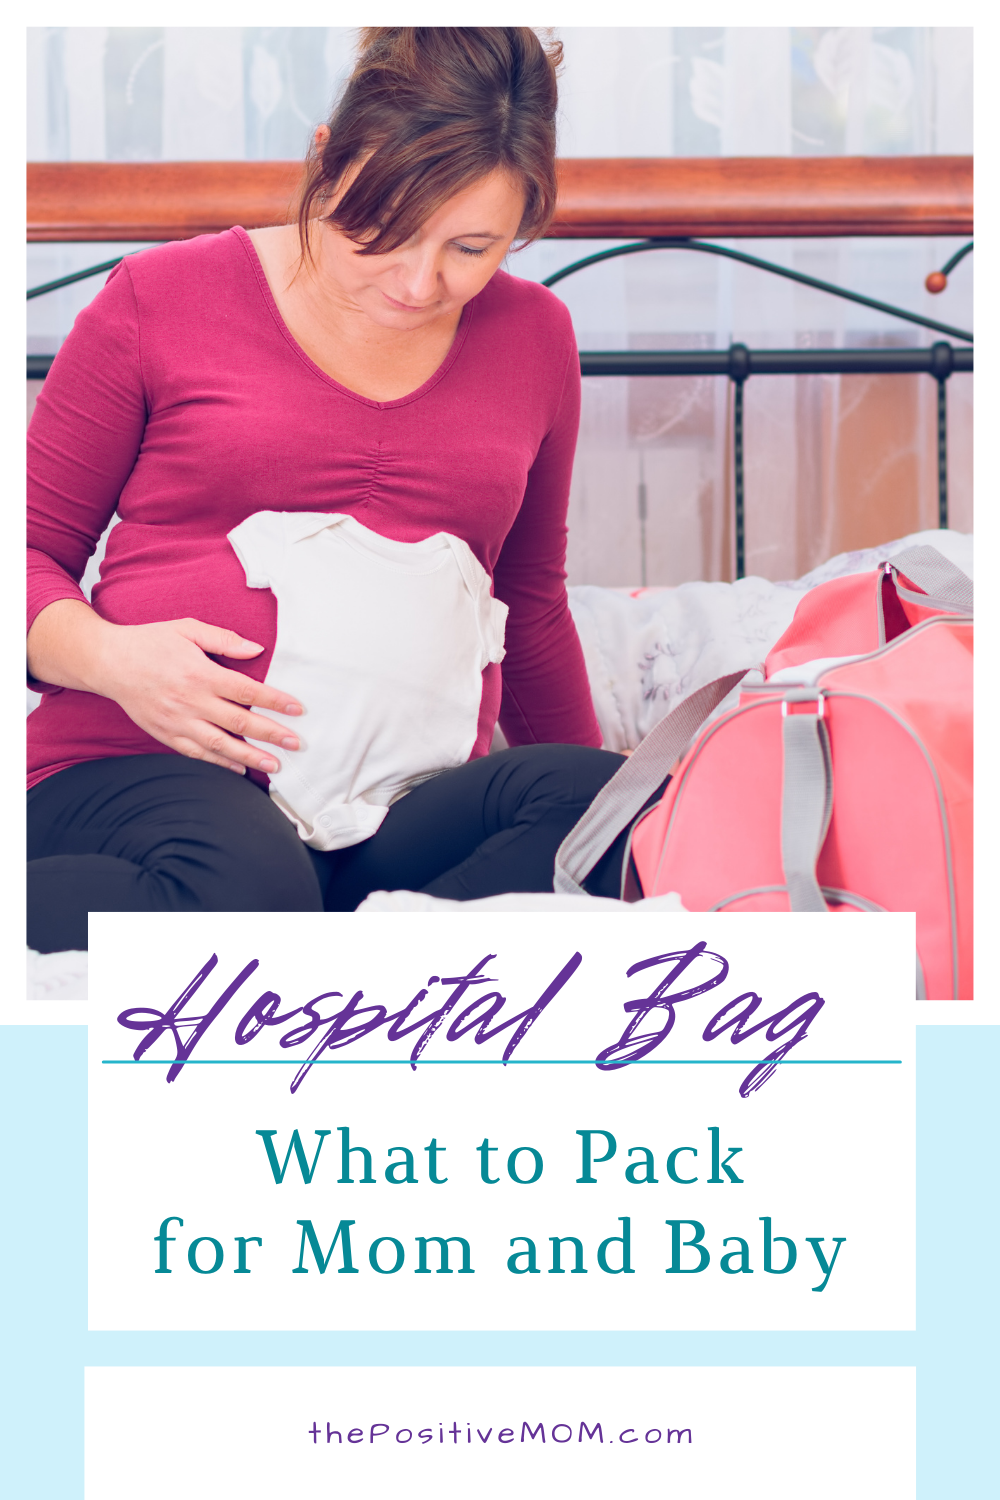 Maternity hospital bag checklist *Printable word document*